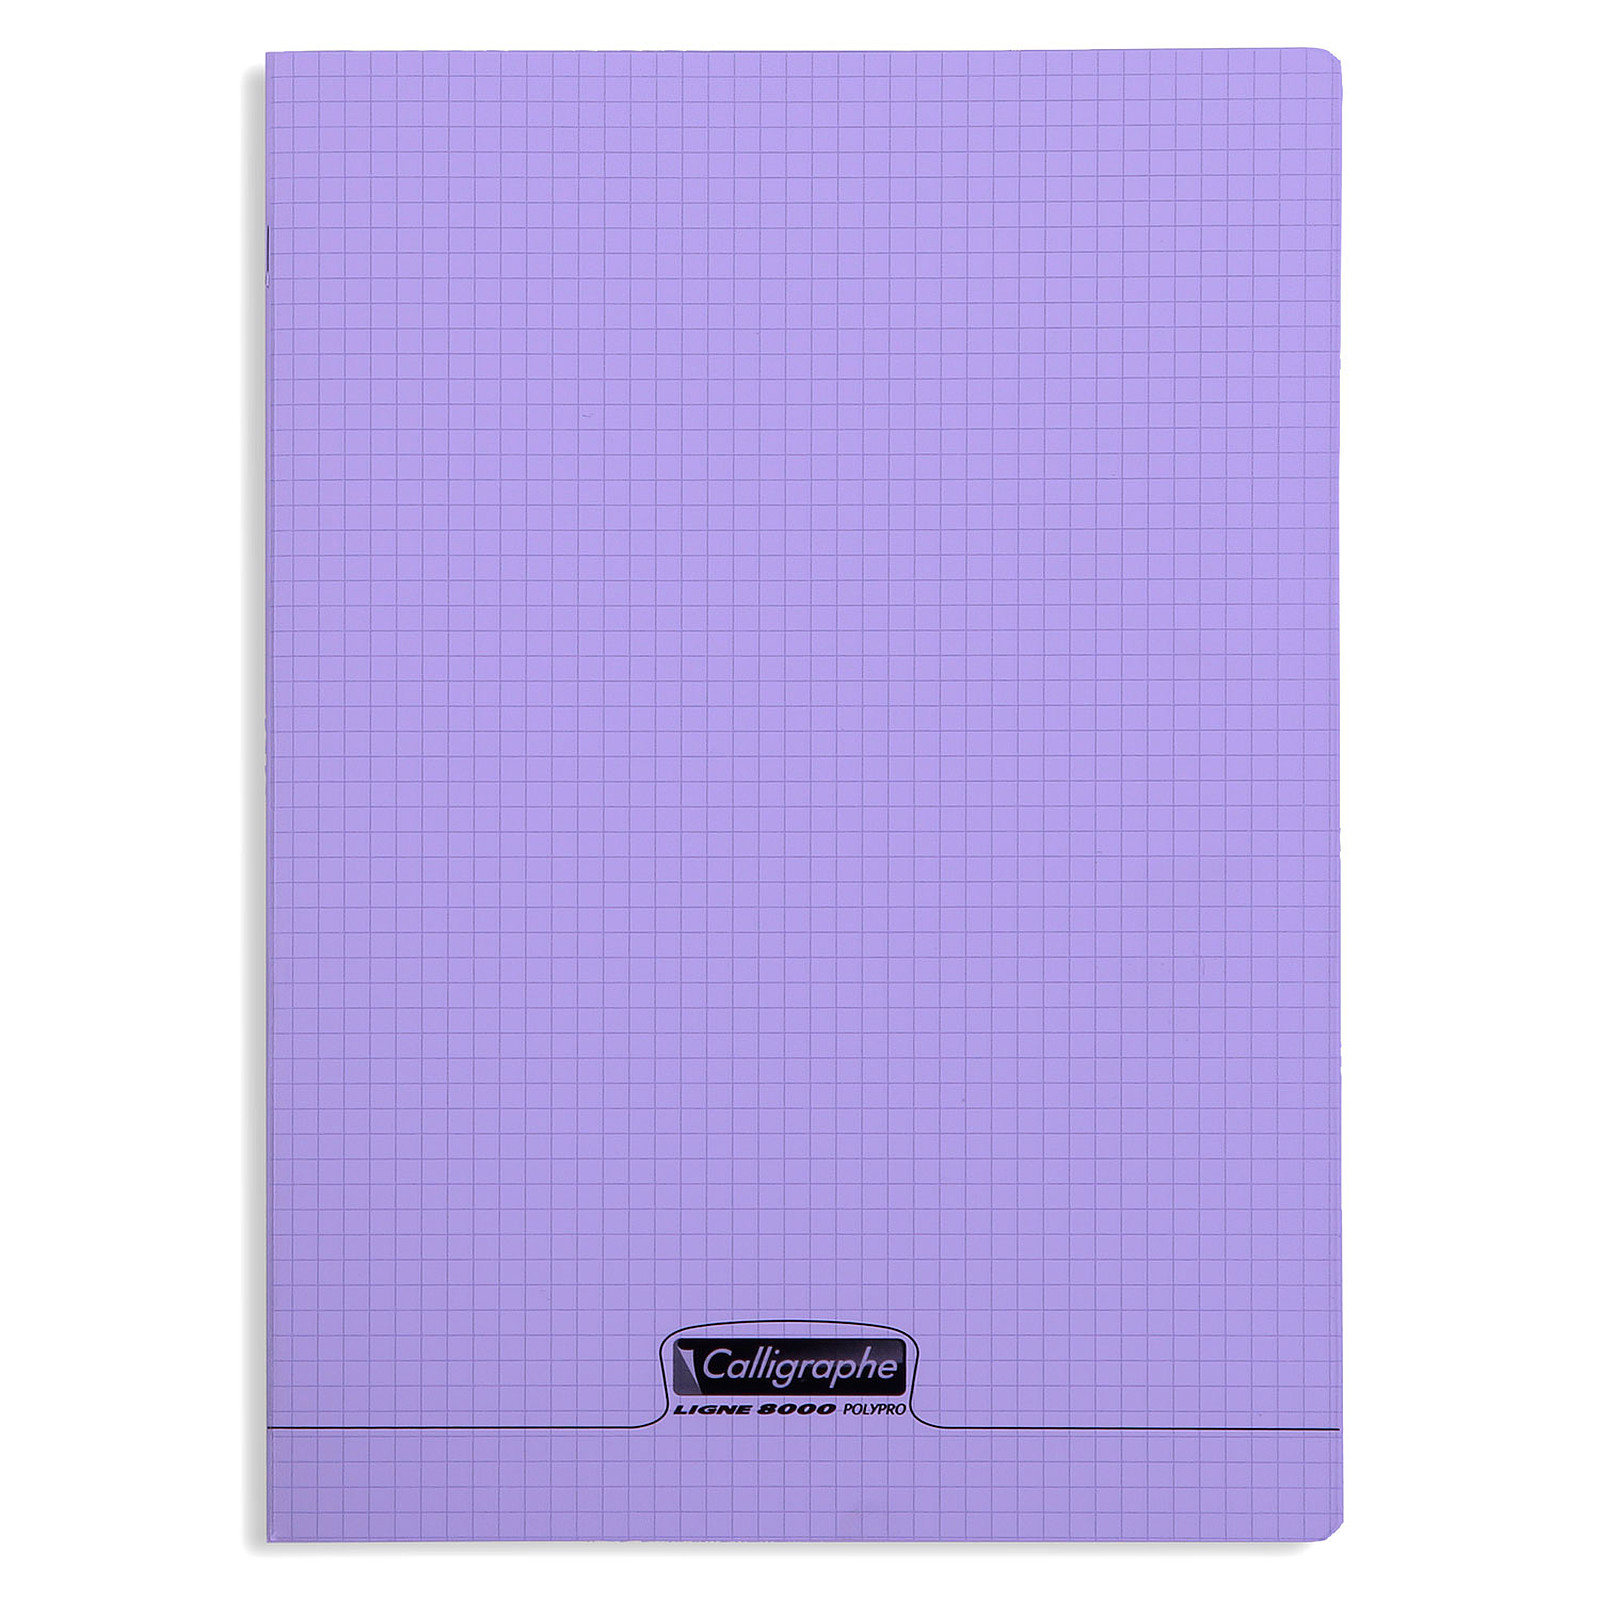 Calligraphe 8000 Polypro Cahier 96 pages 21 x 29.7 cm petits carreaux Violet - Cahier Calligraphe